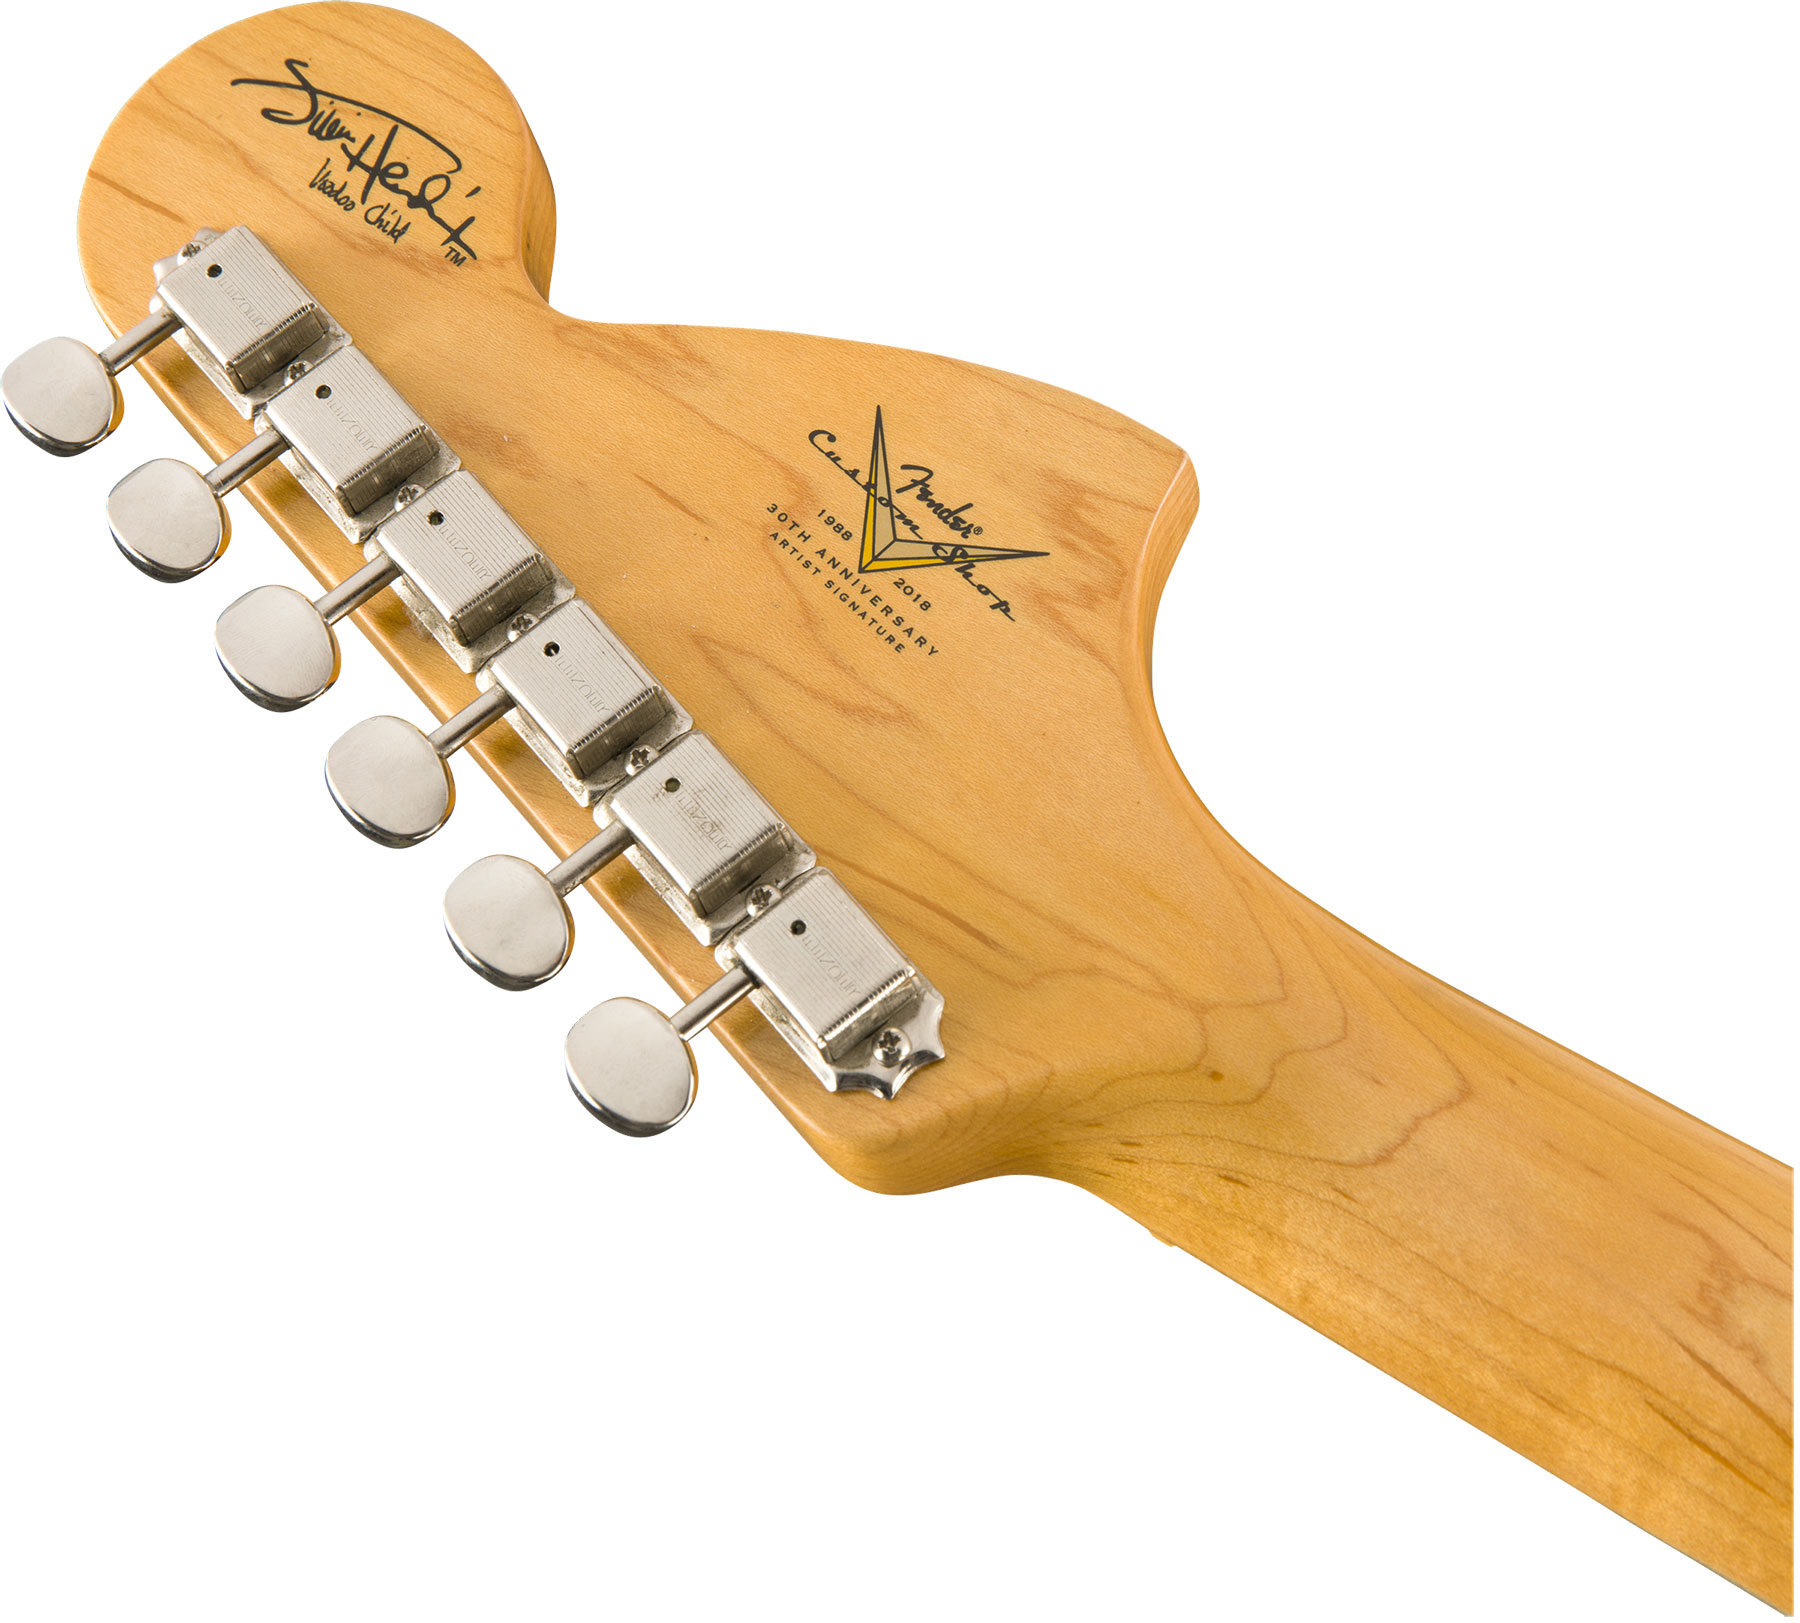 Fender Custom Shop Jimi Hendrix Strat Voodoo Child Signature 2018 Mn - Journeyman Relic Olympic White - Str shape electric guitar - Variation 4